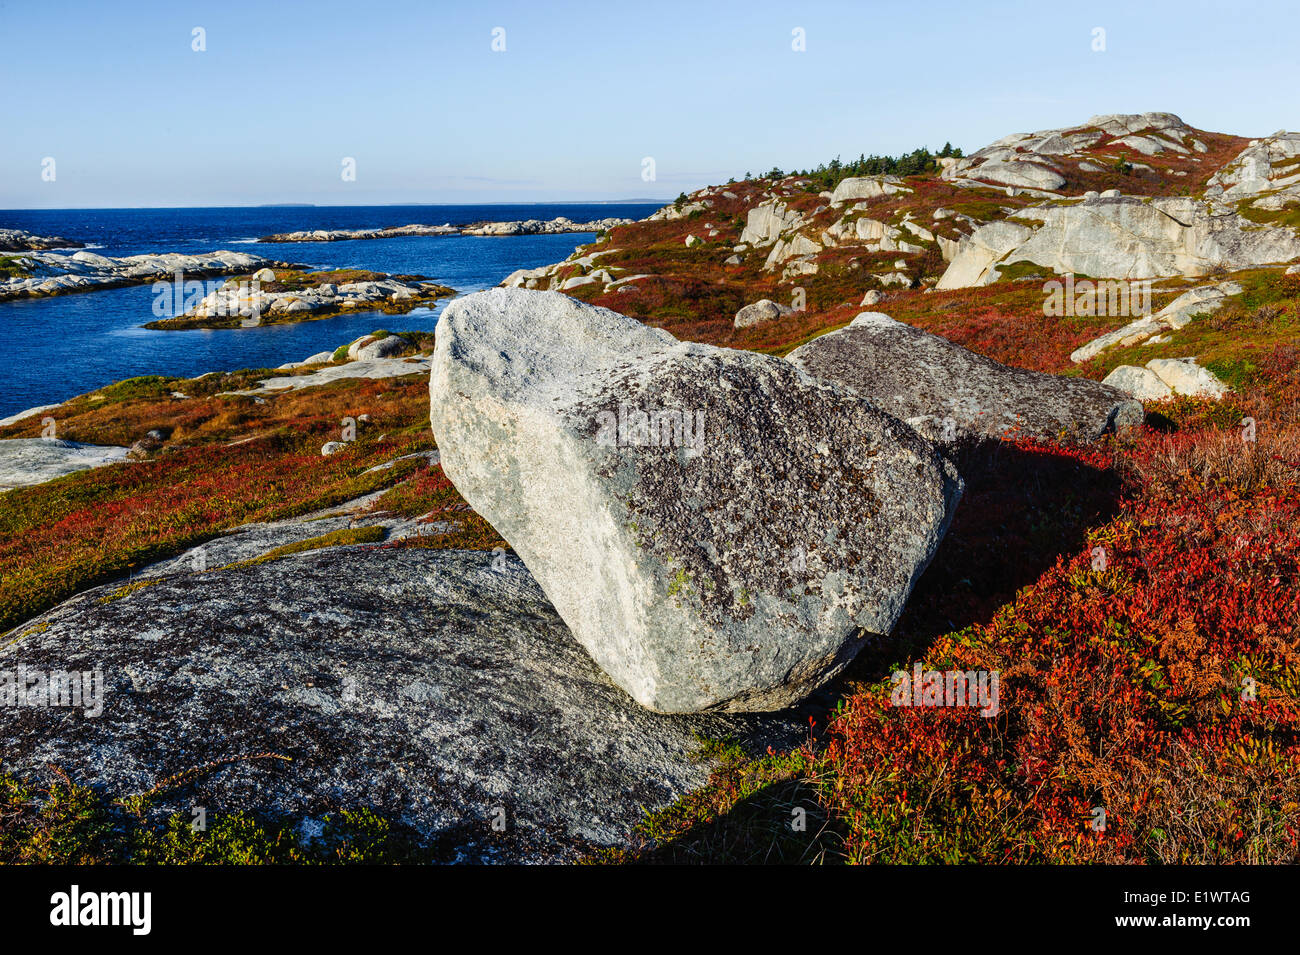 Devonian granite boulders. Atlantic Ocean coastline. Peggys Cove Conservation Area, Nova Scotia. Canada. Stock Photo